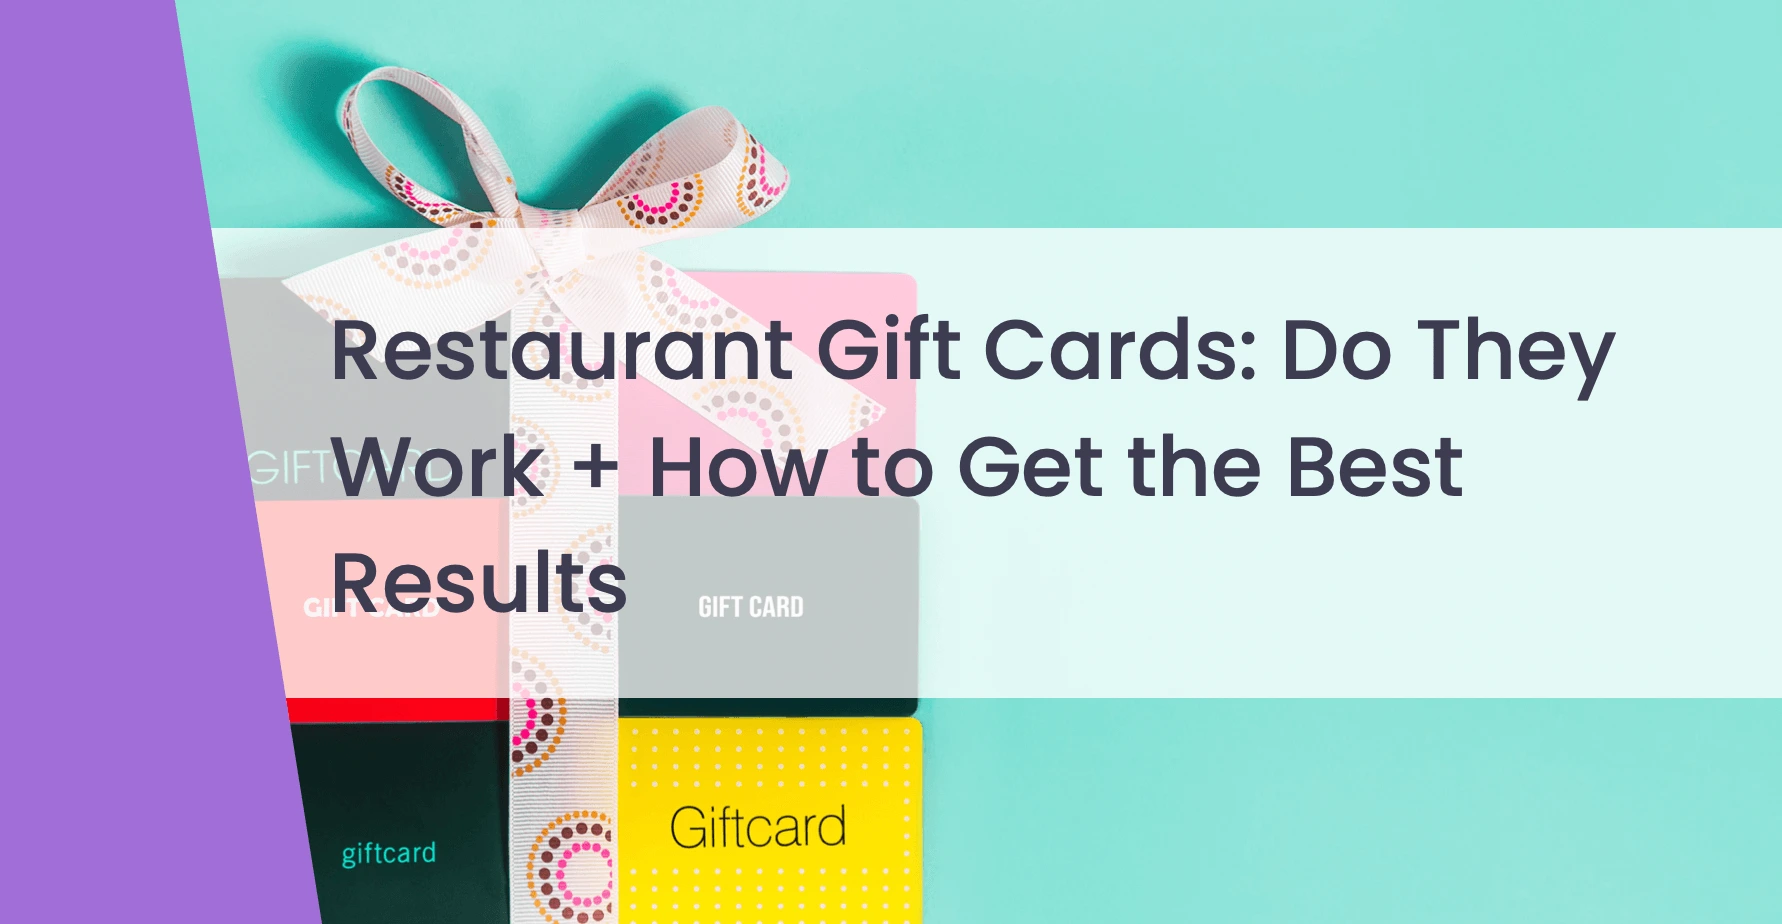 Milagro restaurant gift cards